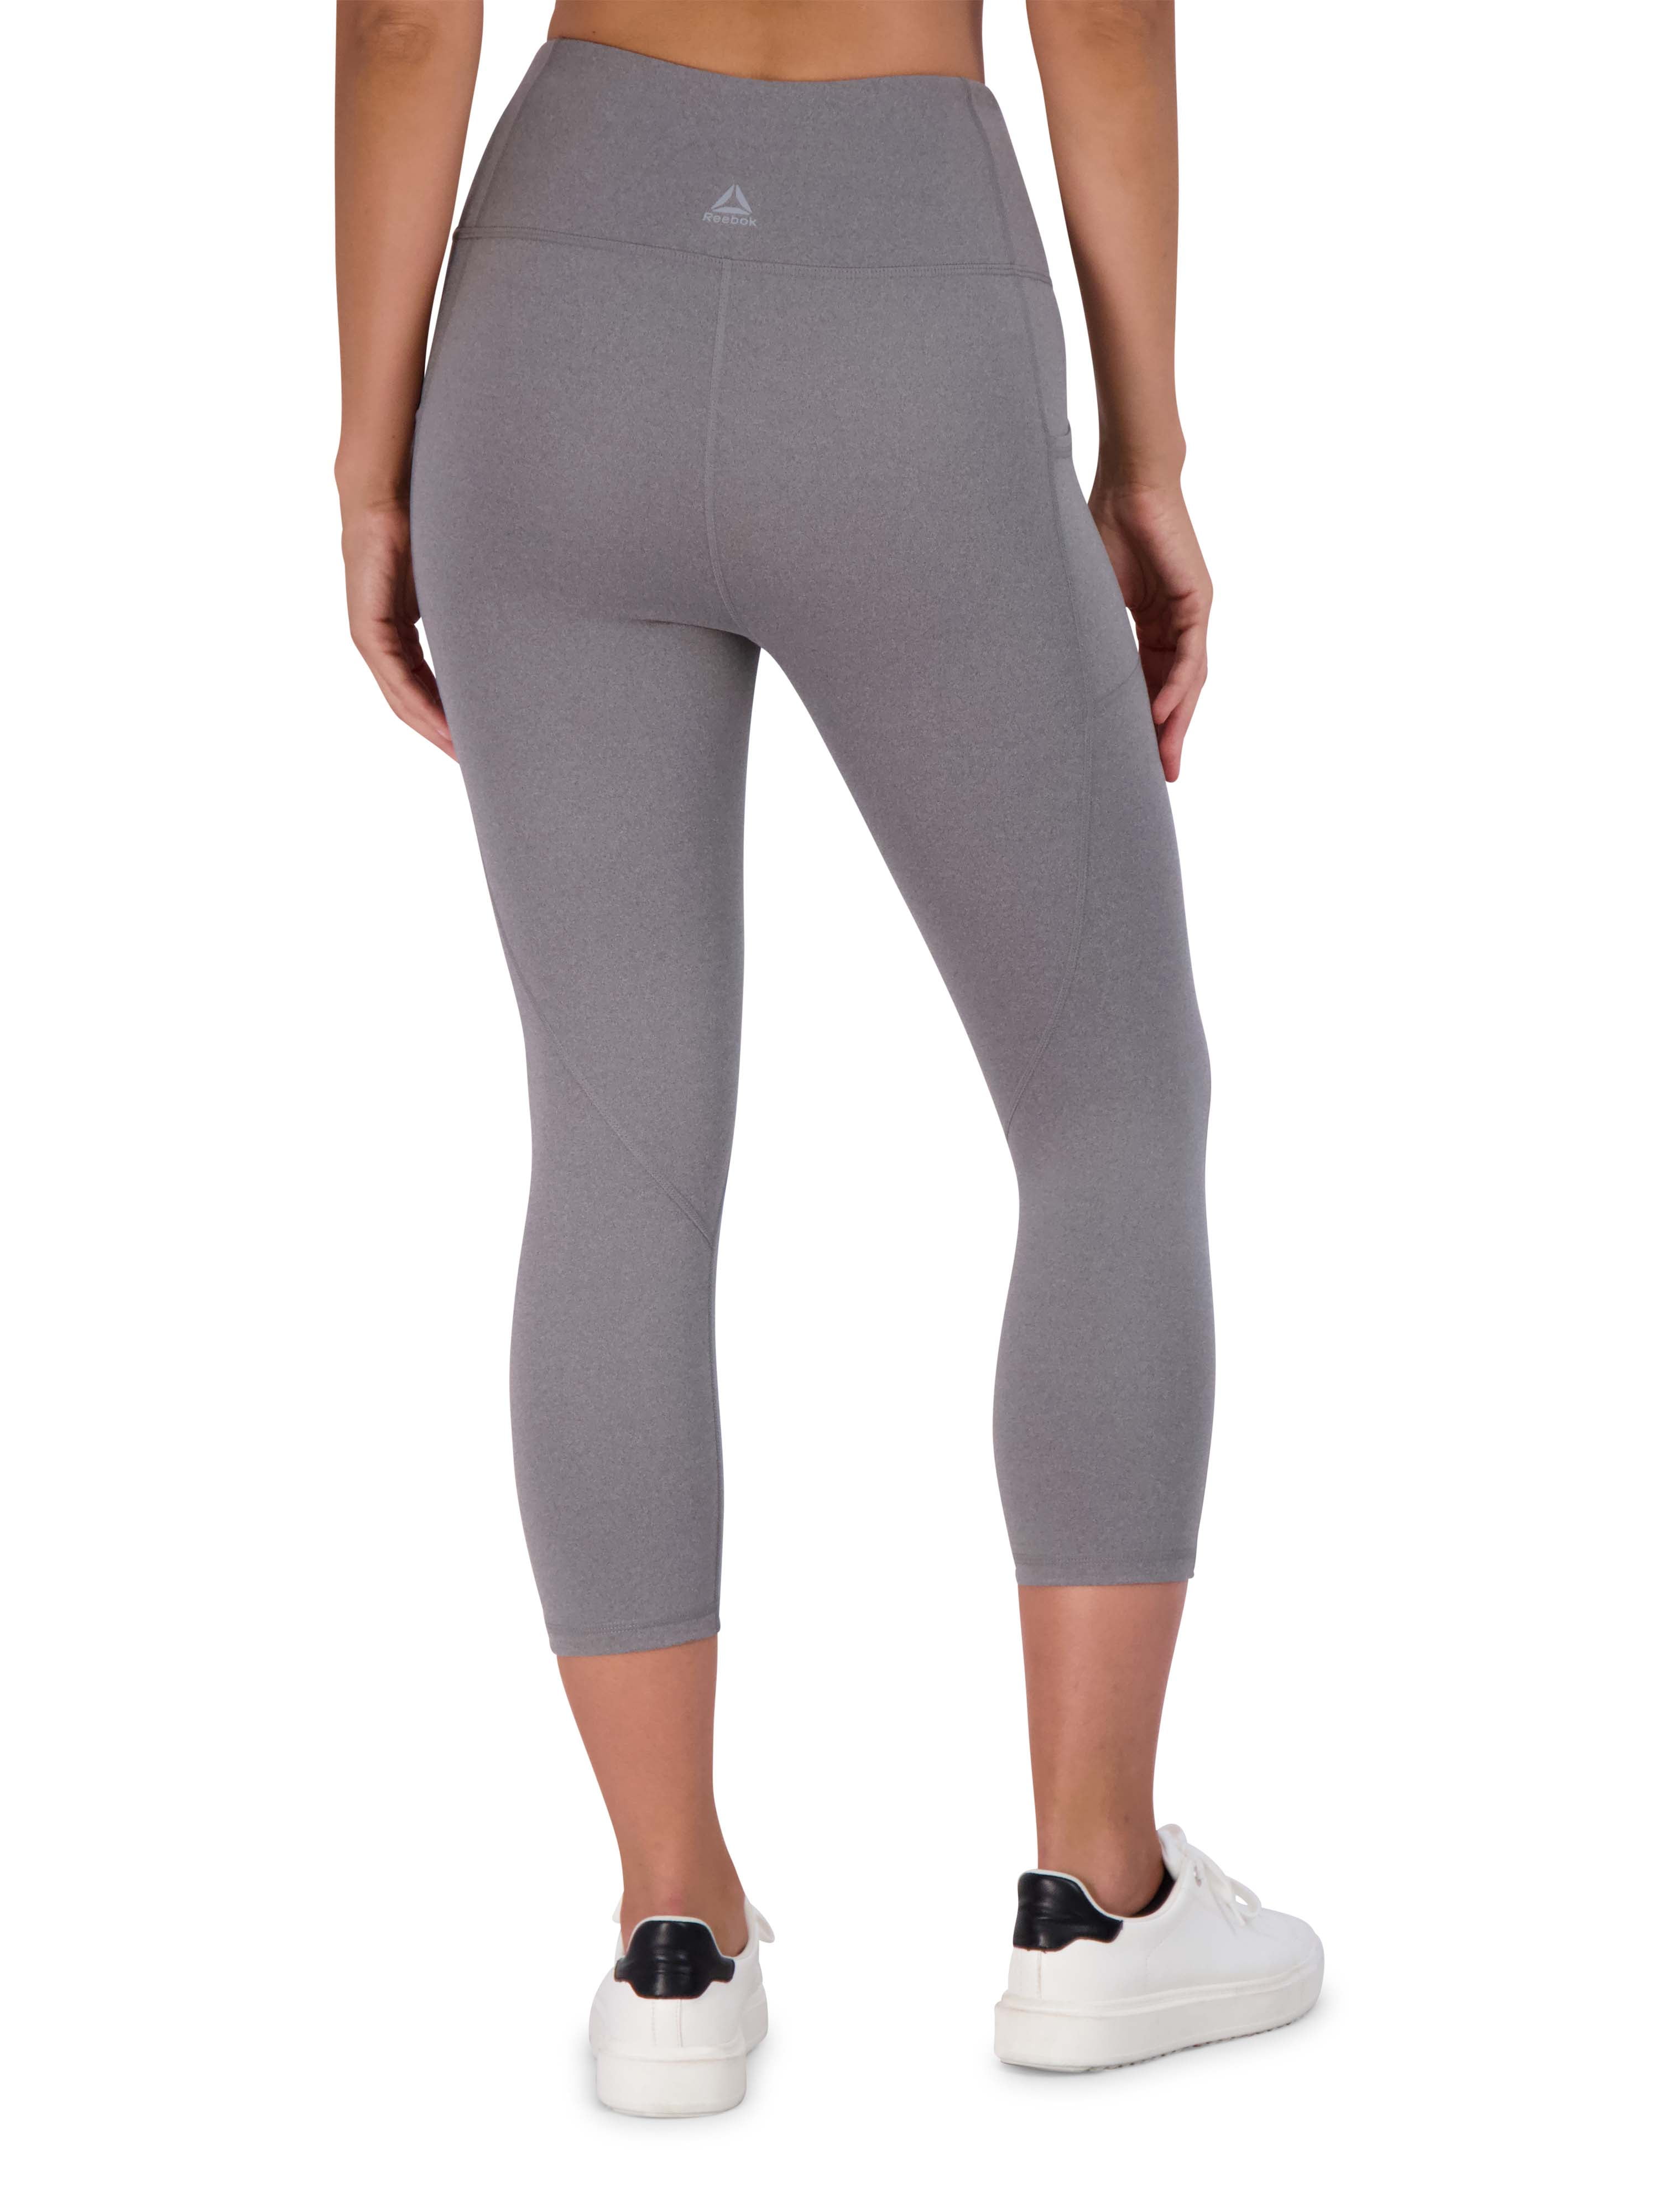 Reebok Womens High Rise Capri Leggings Yoga Pants, Grey, X-Small